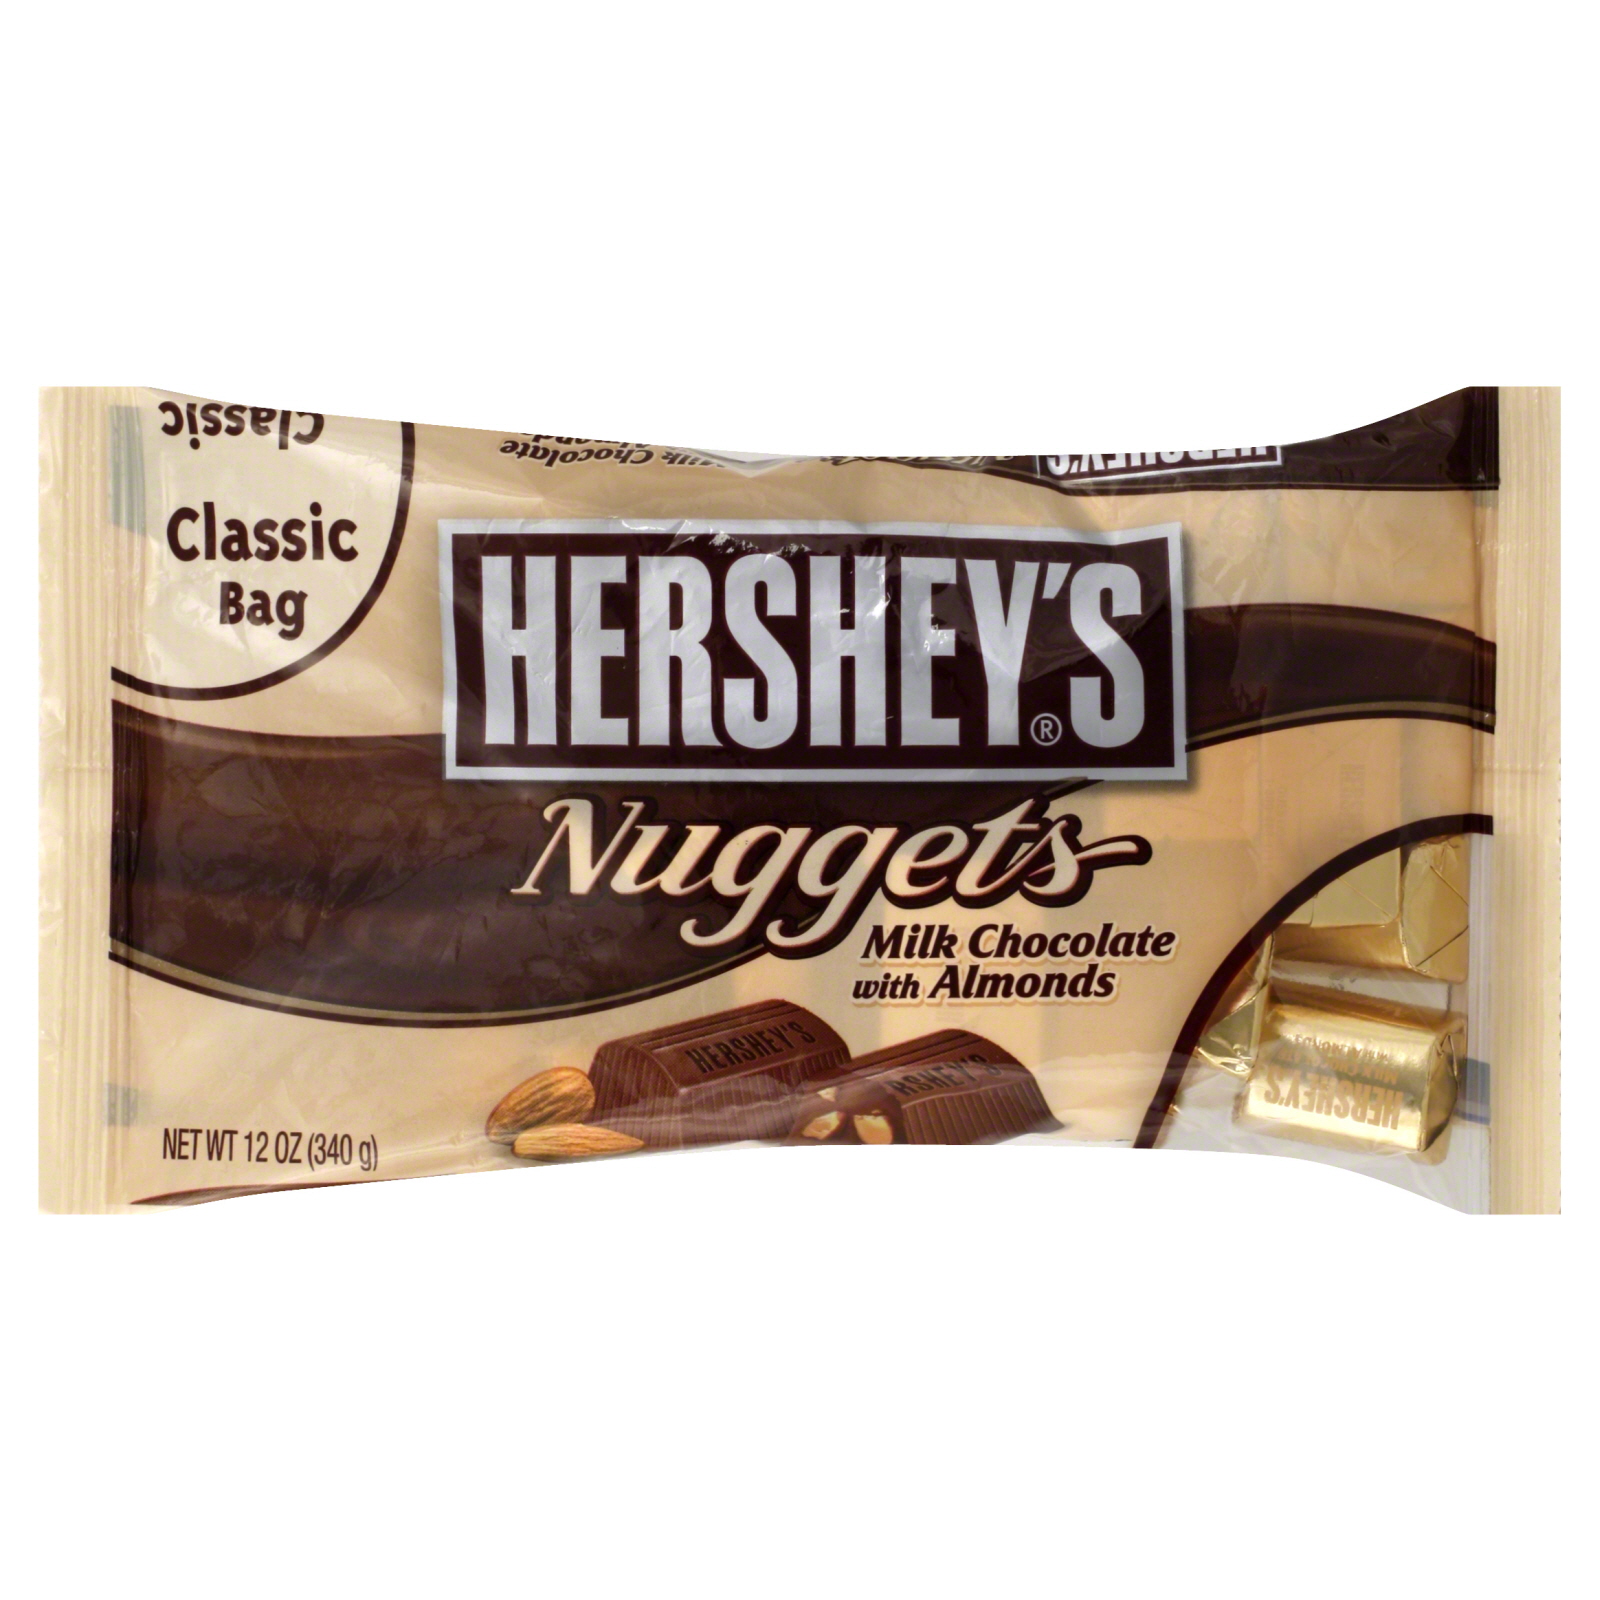 Hershey's Nuggets, Milk Chocolate with Almonds, 12 oz (340 g)